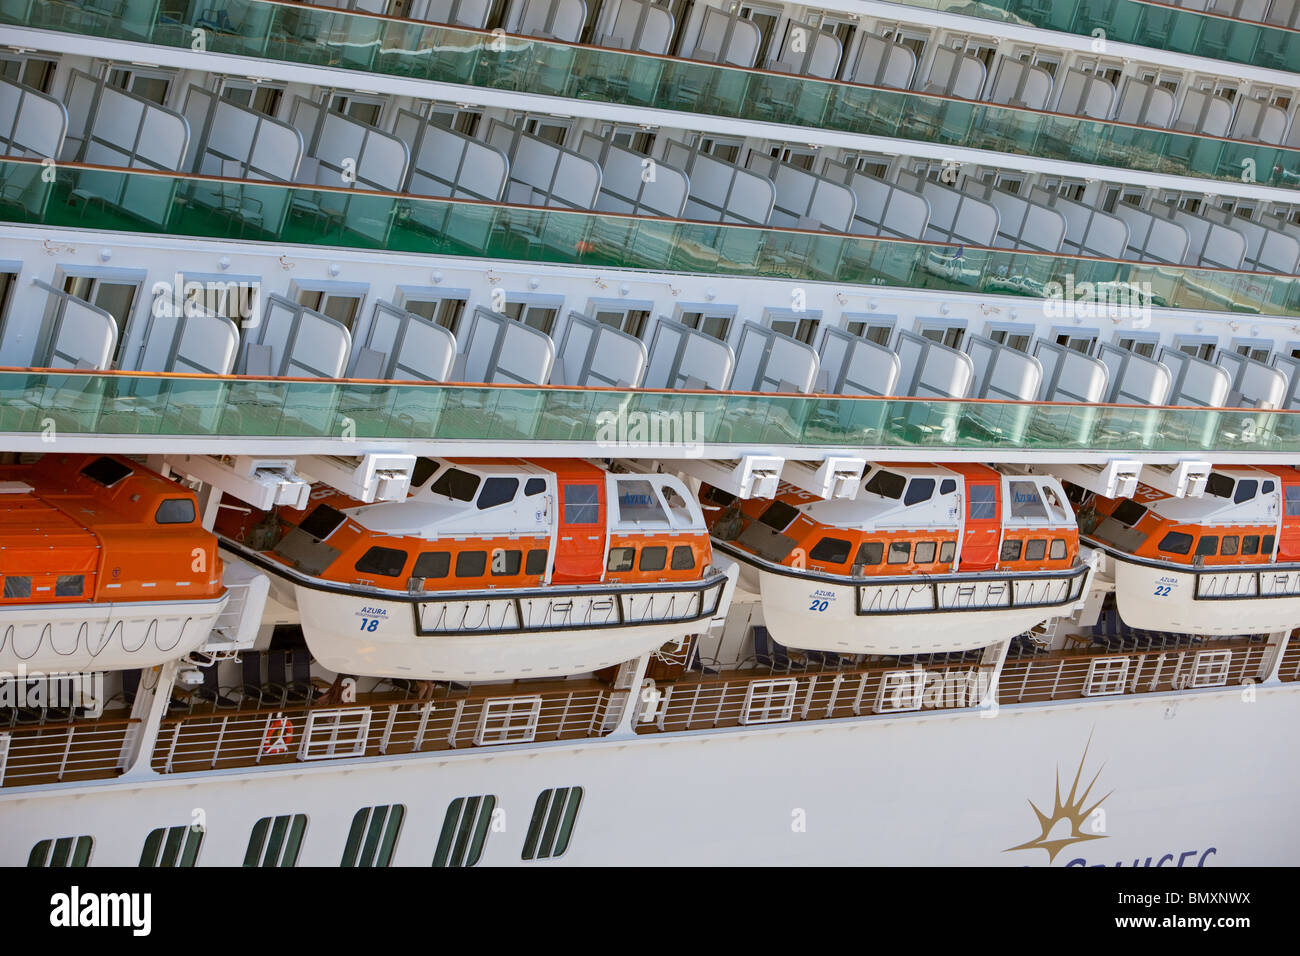 Neueste Rettungsboot entwirft sitzen an Ihrem Platz unter Balkonen Passagierkabinen gesichert. P & O-Liner "Azura". Stockfoto